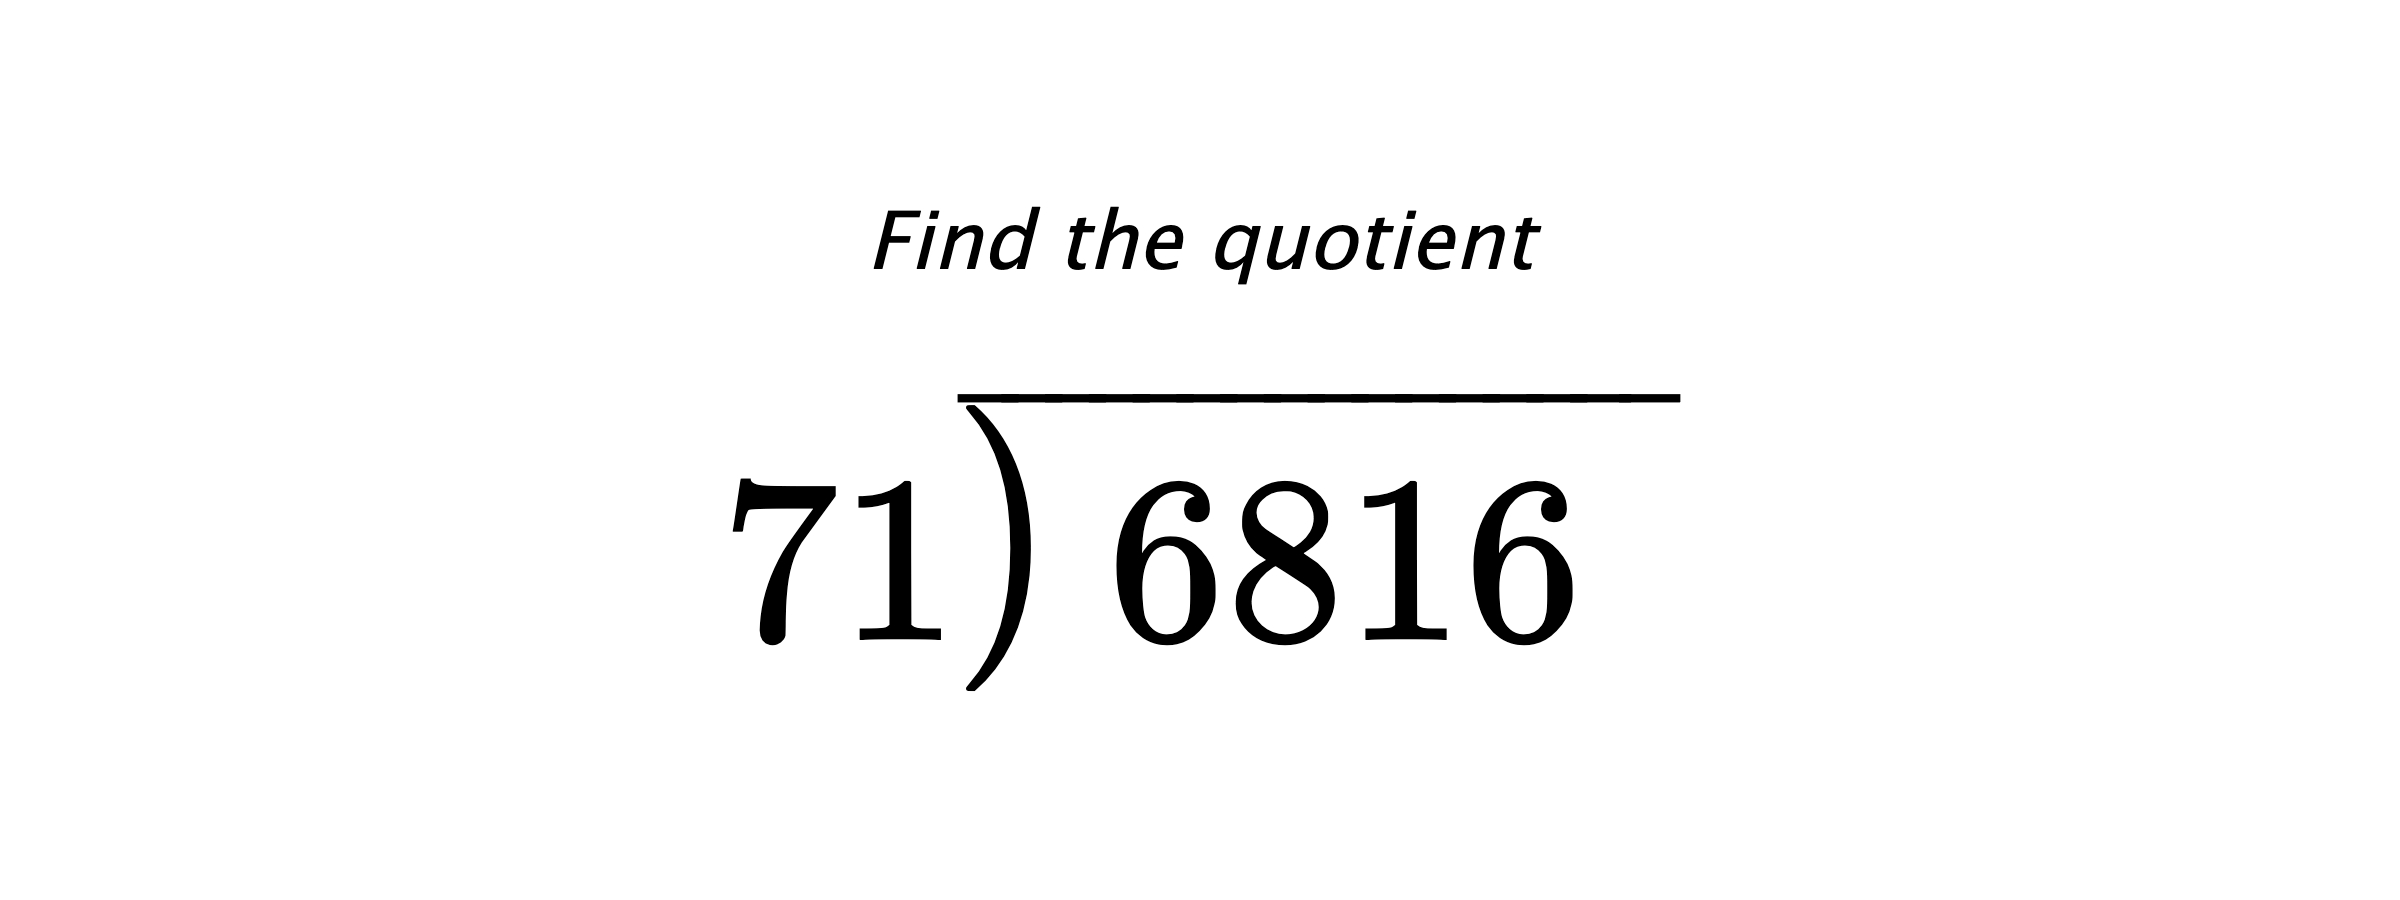 Find the quotient $ 71{\overline{\smash{\raise.3ex\hbox{$\big)$}}\,6816\phantom{)}}} $